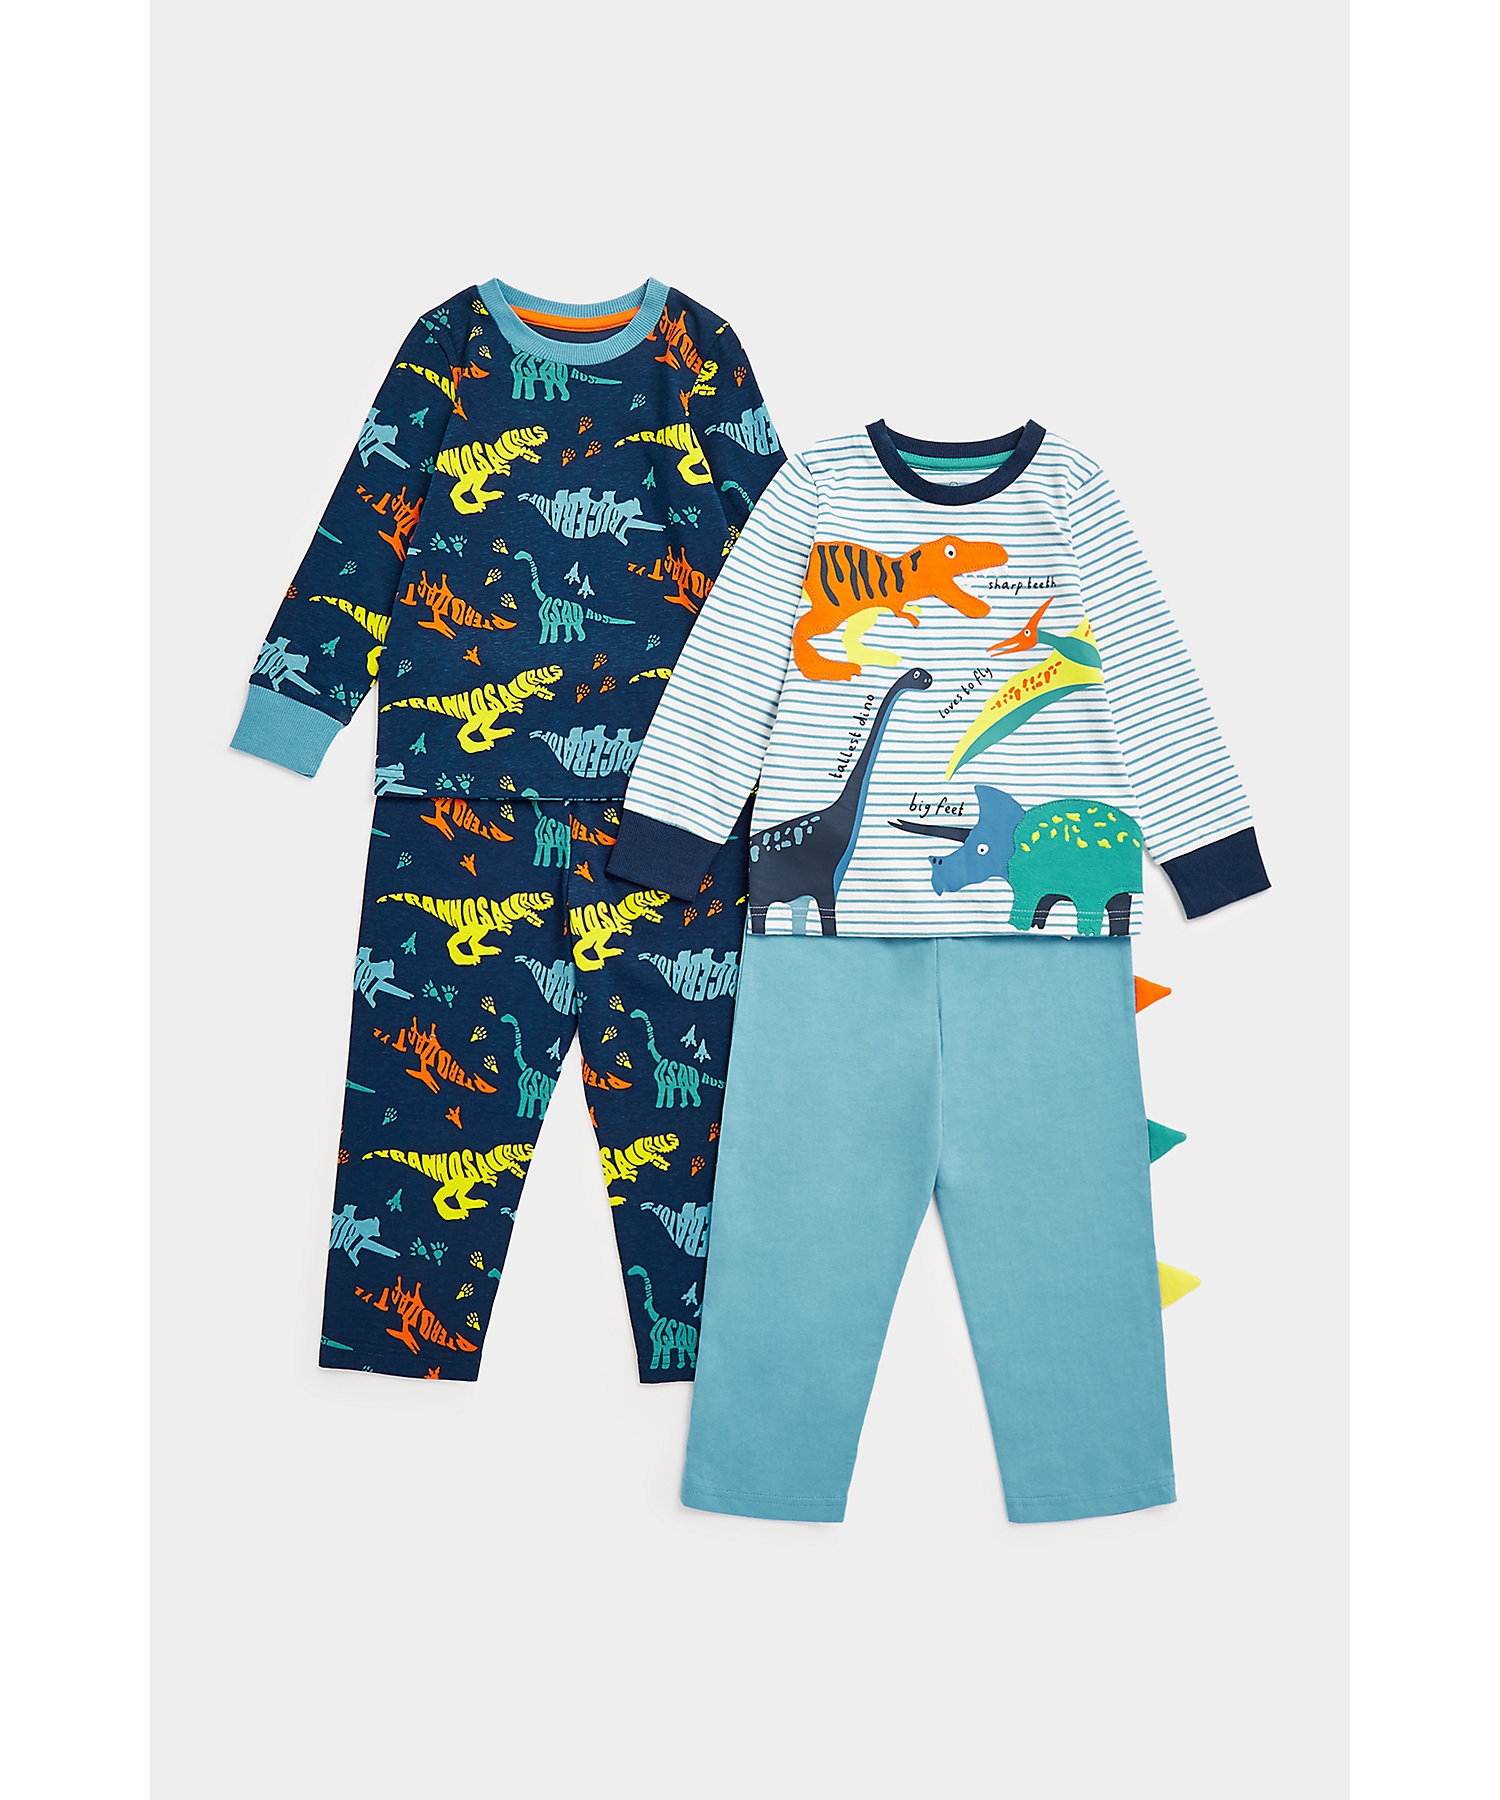 Boys Full Sleeves Pyjama Sets -Pack of 2-Multicolor